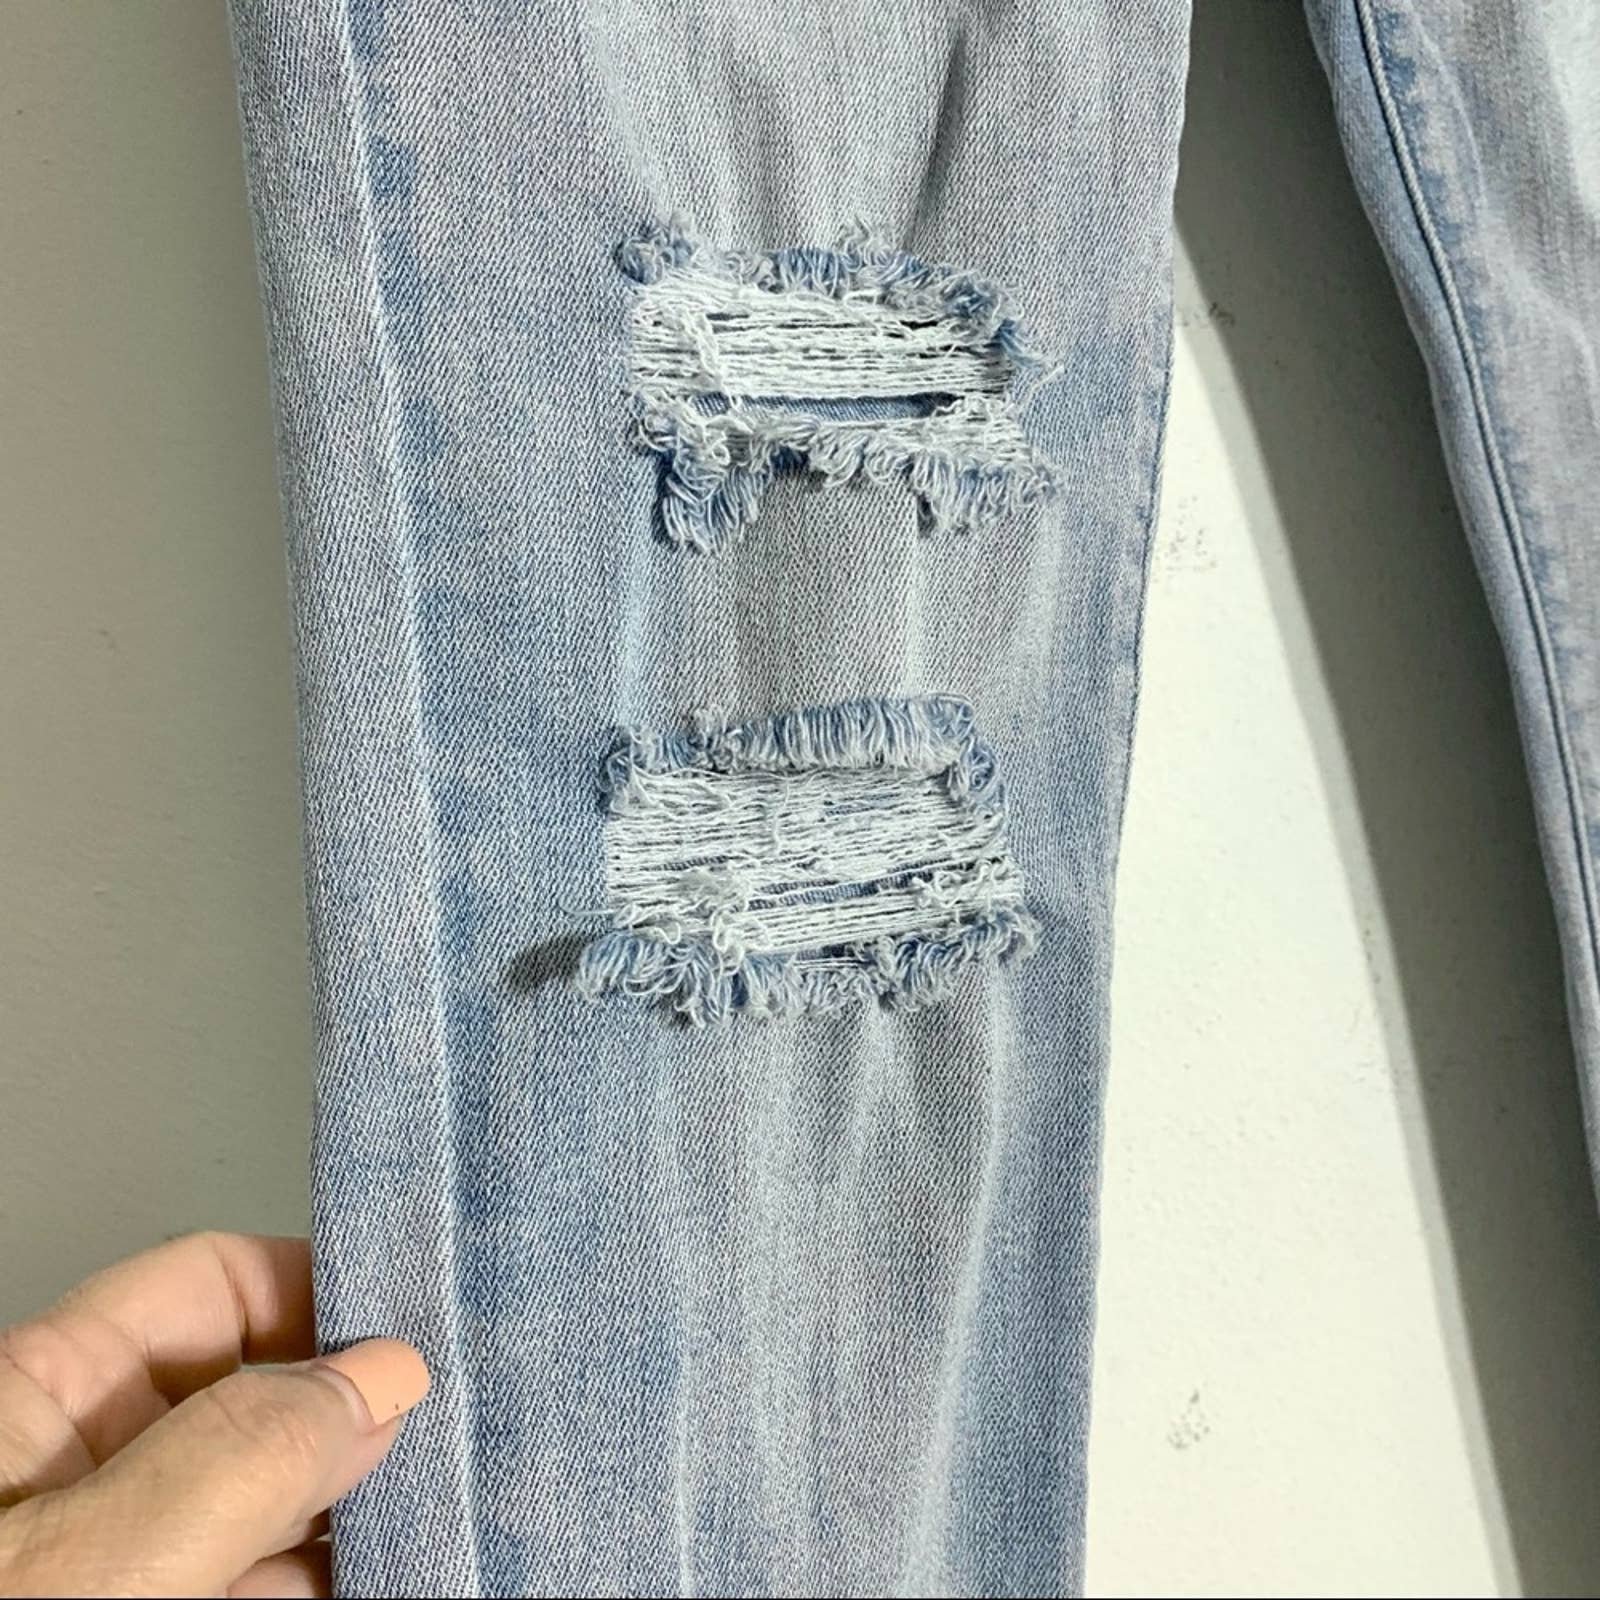 good price Levi’s 721 High Rise Skinny Jeans Distresses Light wash stretch EUC size 28 ponYInyv7 Zero Profit 